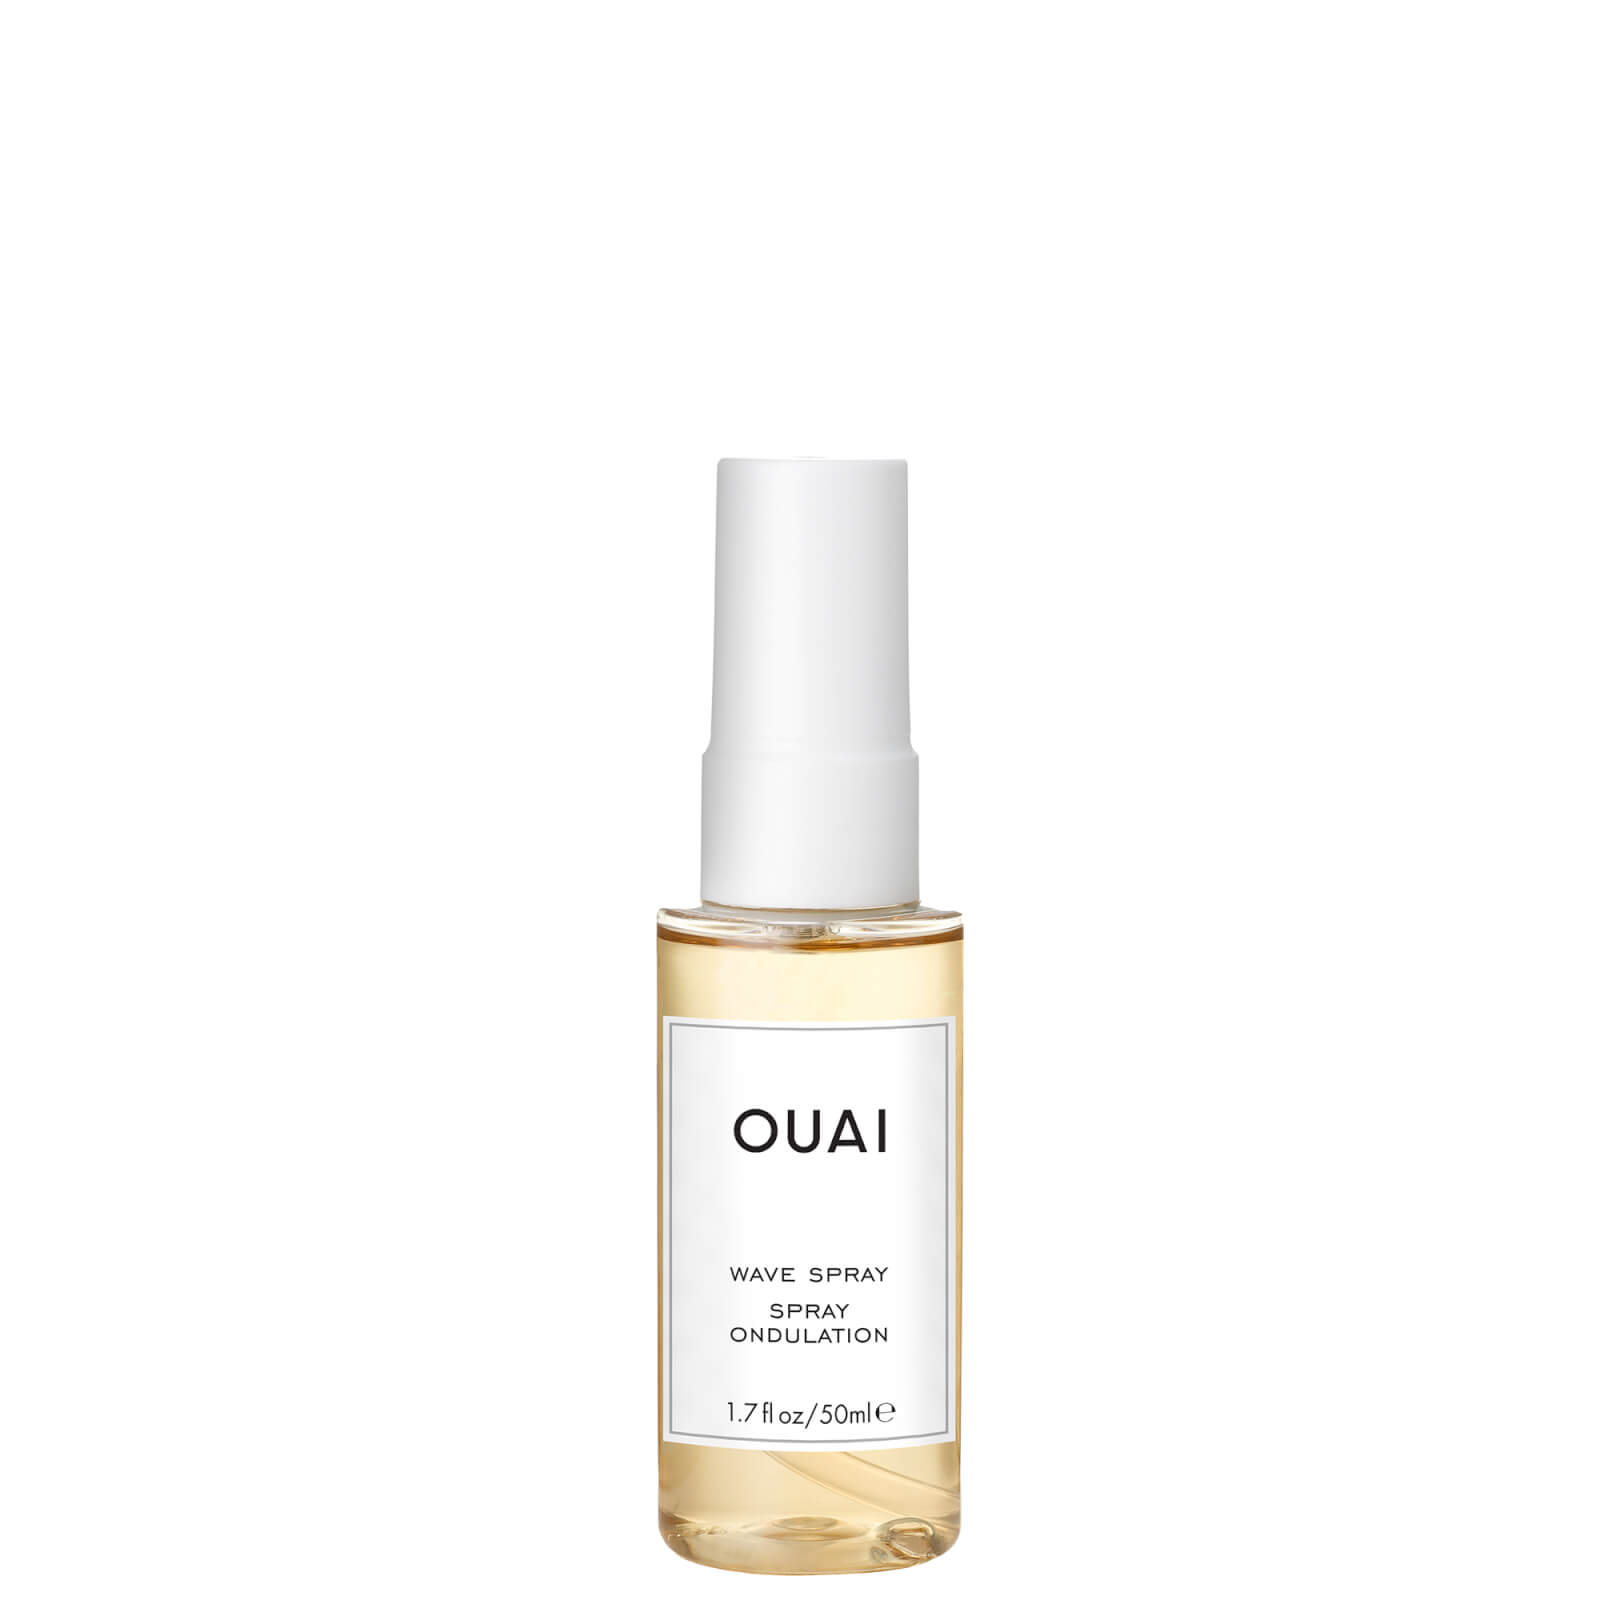 OUAI Wave Spray Luxe 50ml product